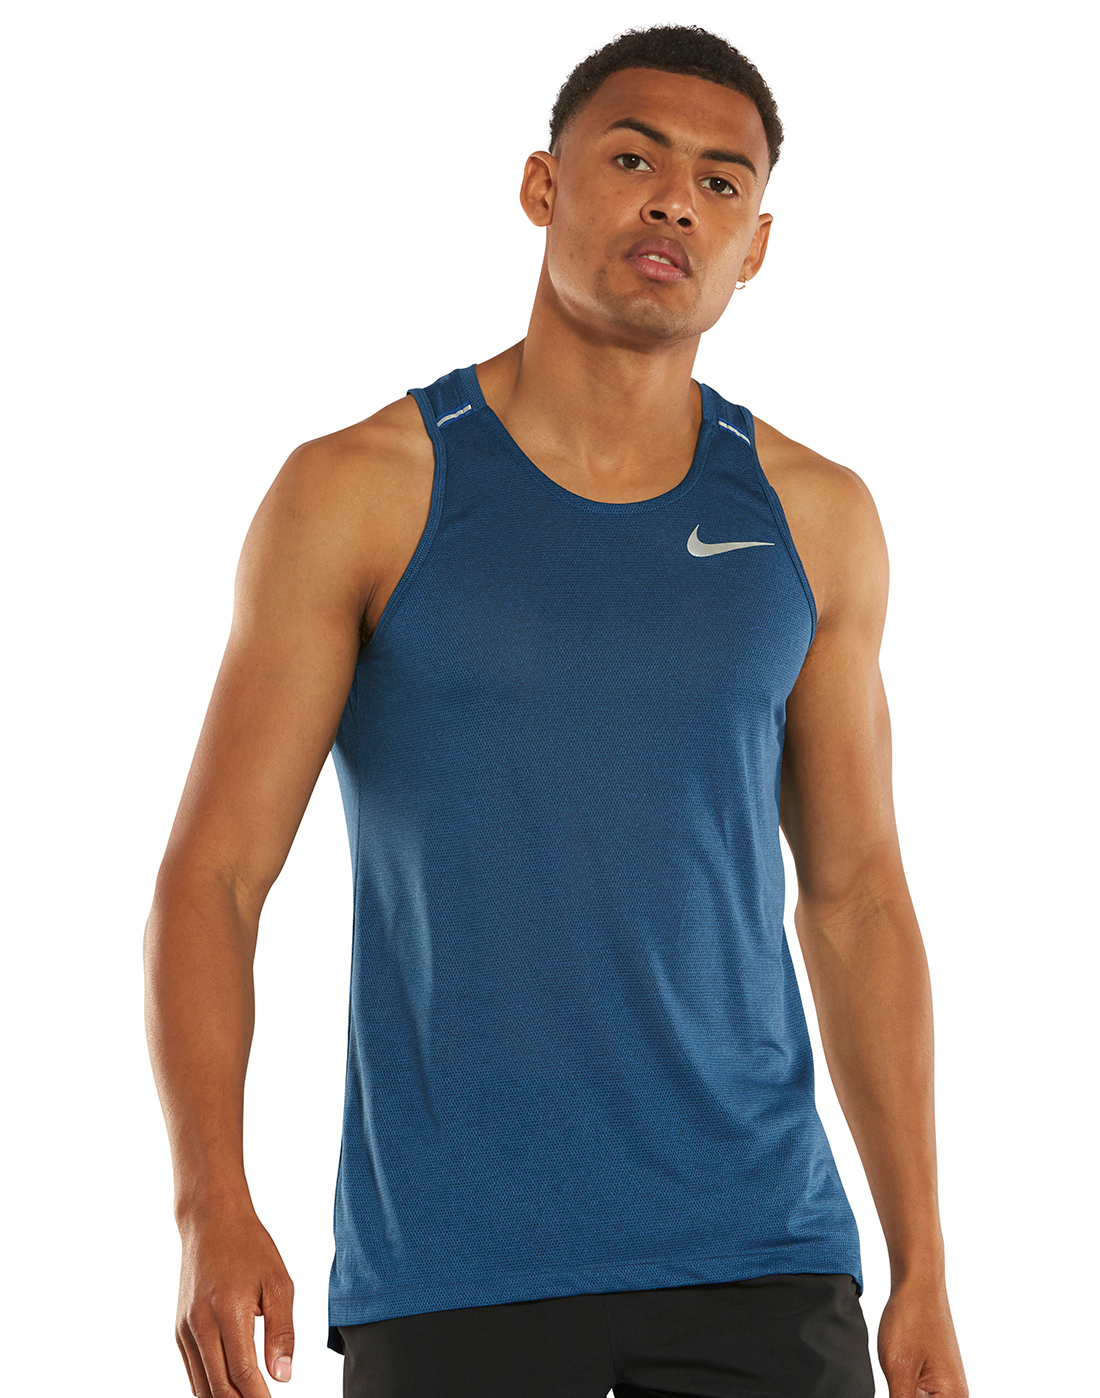 Men's Blue Nike Running Tank | Life Style Sports